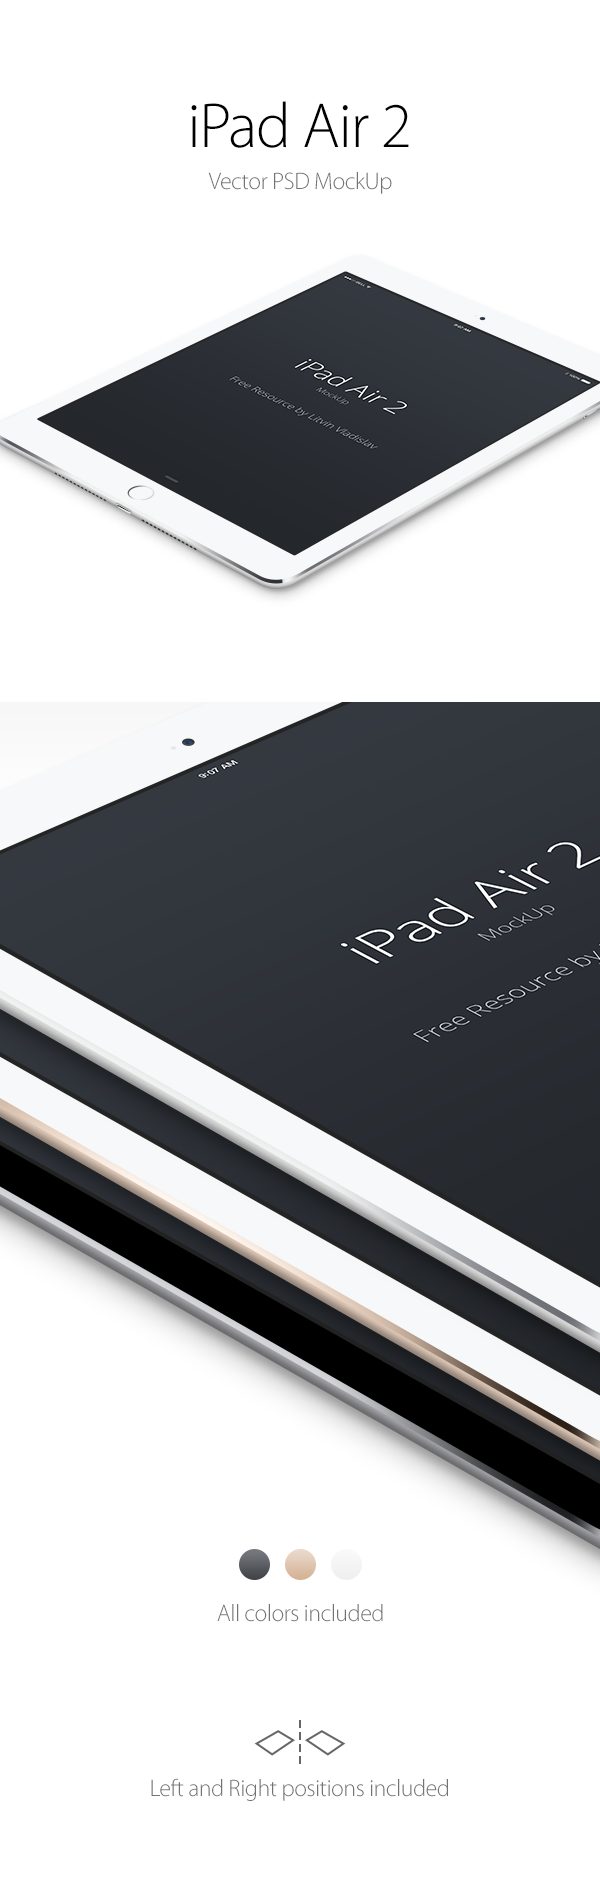 Asset | iPad Air 2 Perspective MockUp